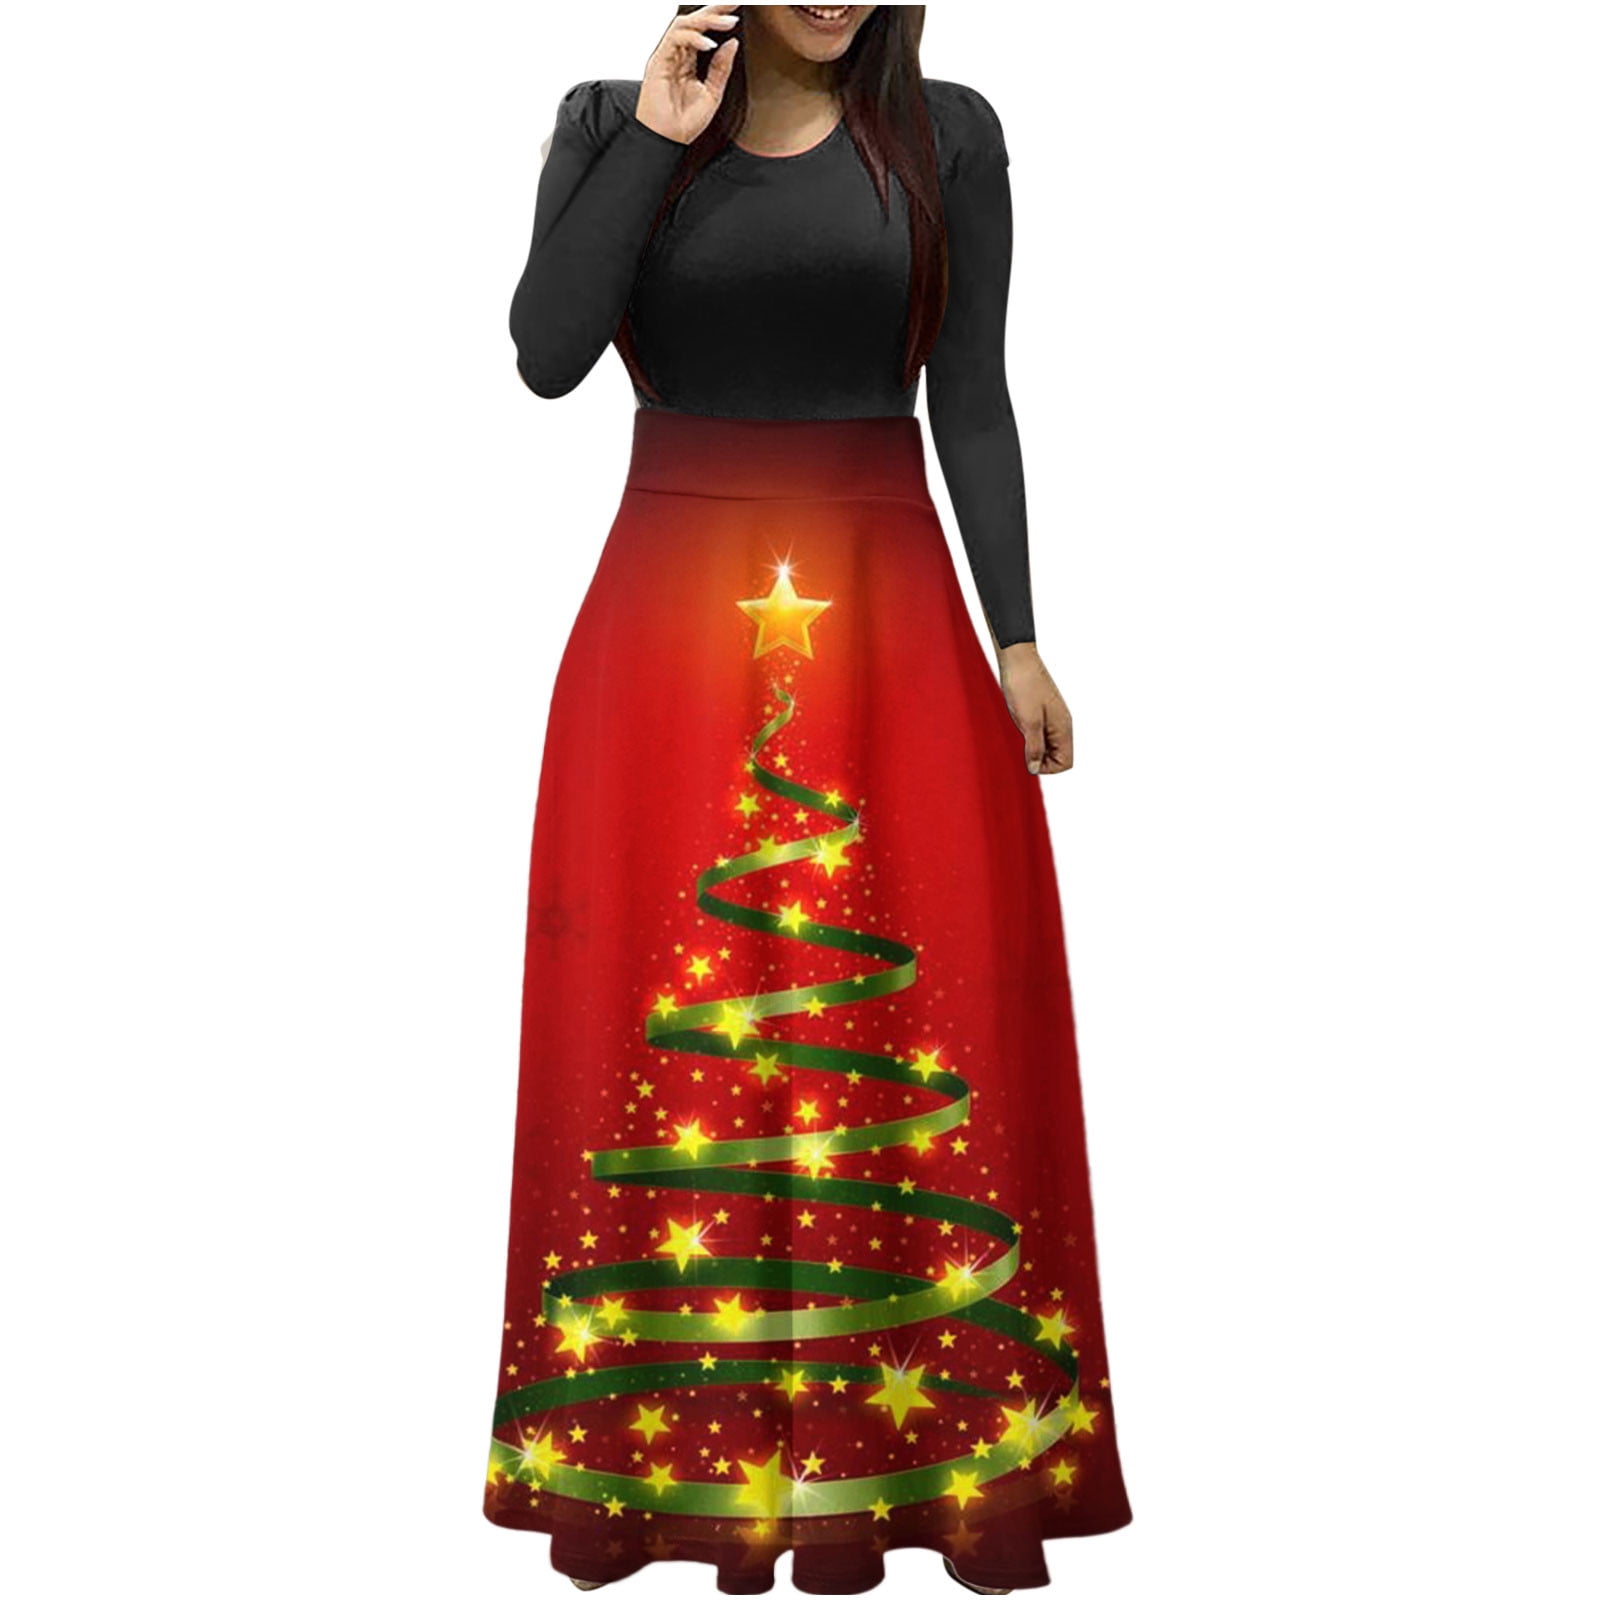  JIOEEH Womens Christmas Dress,Womens Clothing Black of